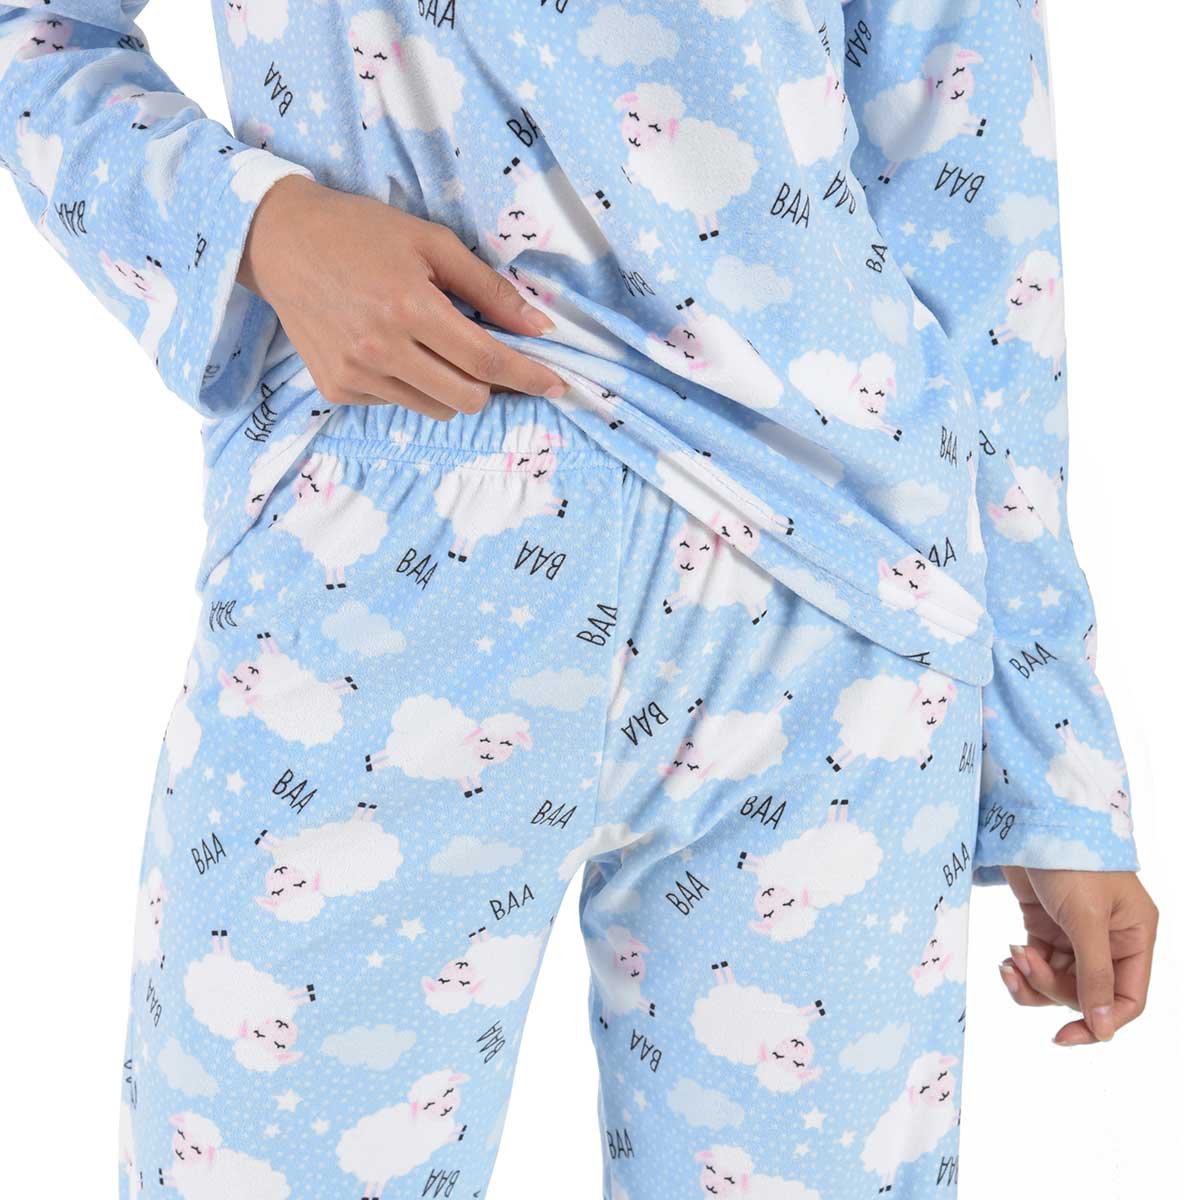 Pijama para Dama Fleece Estampado Baa Isotoner